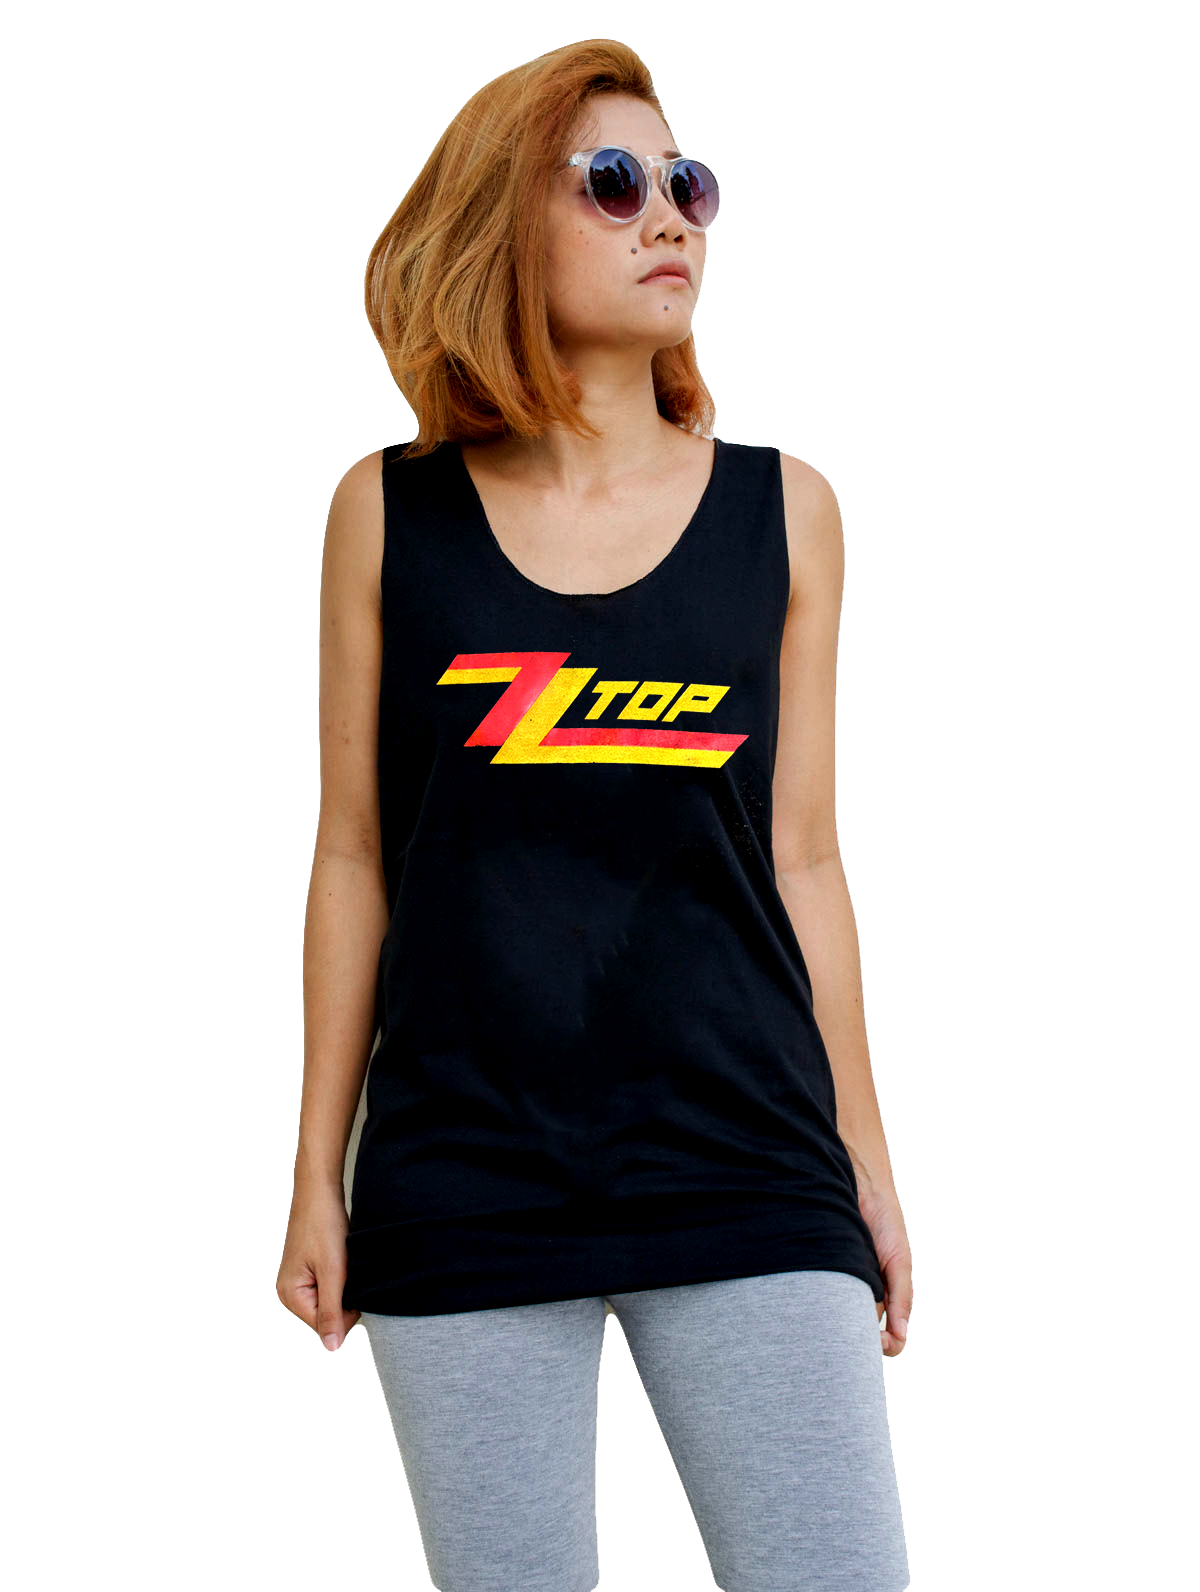 Unisex ZZ Top Tank-Top Singlet vest Sleeveless T-shirt